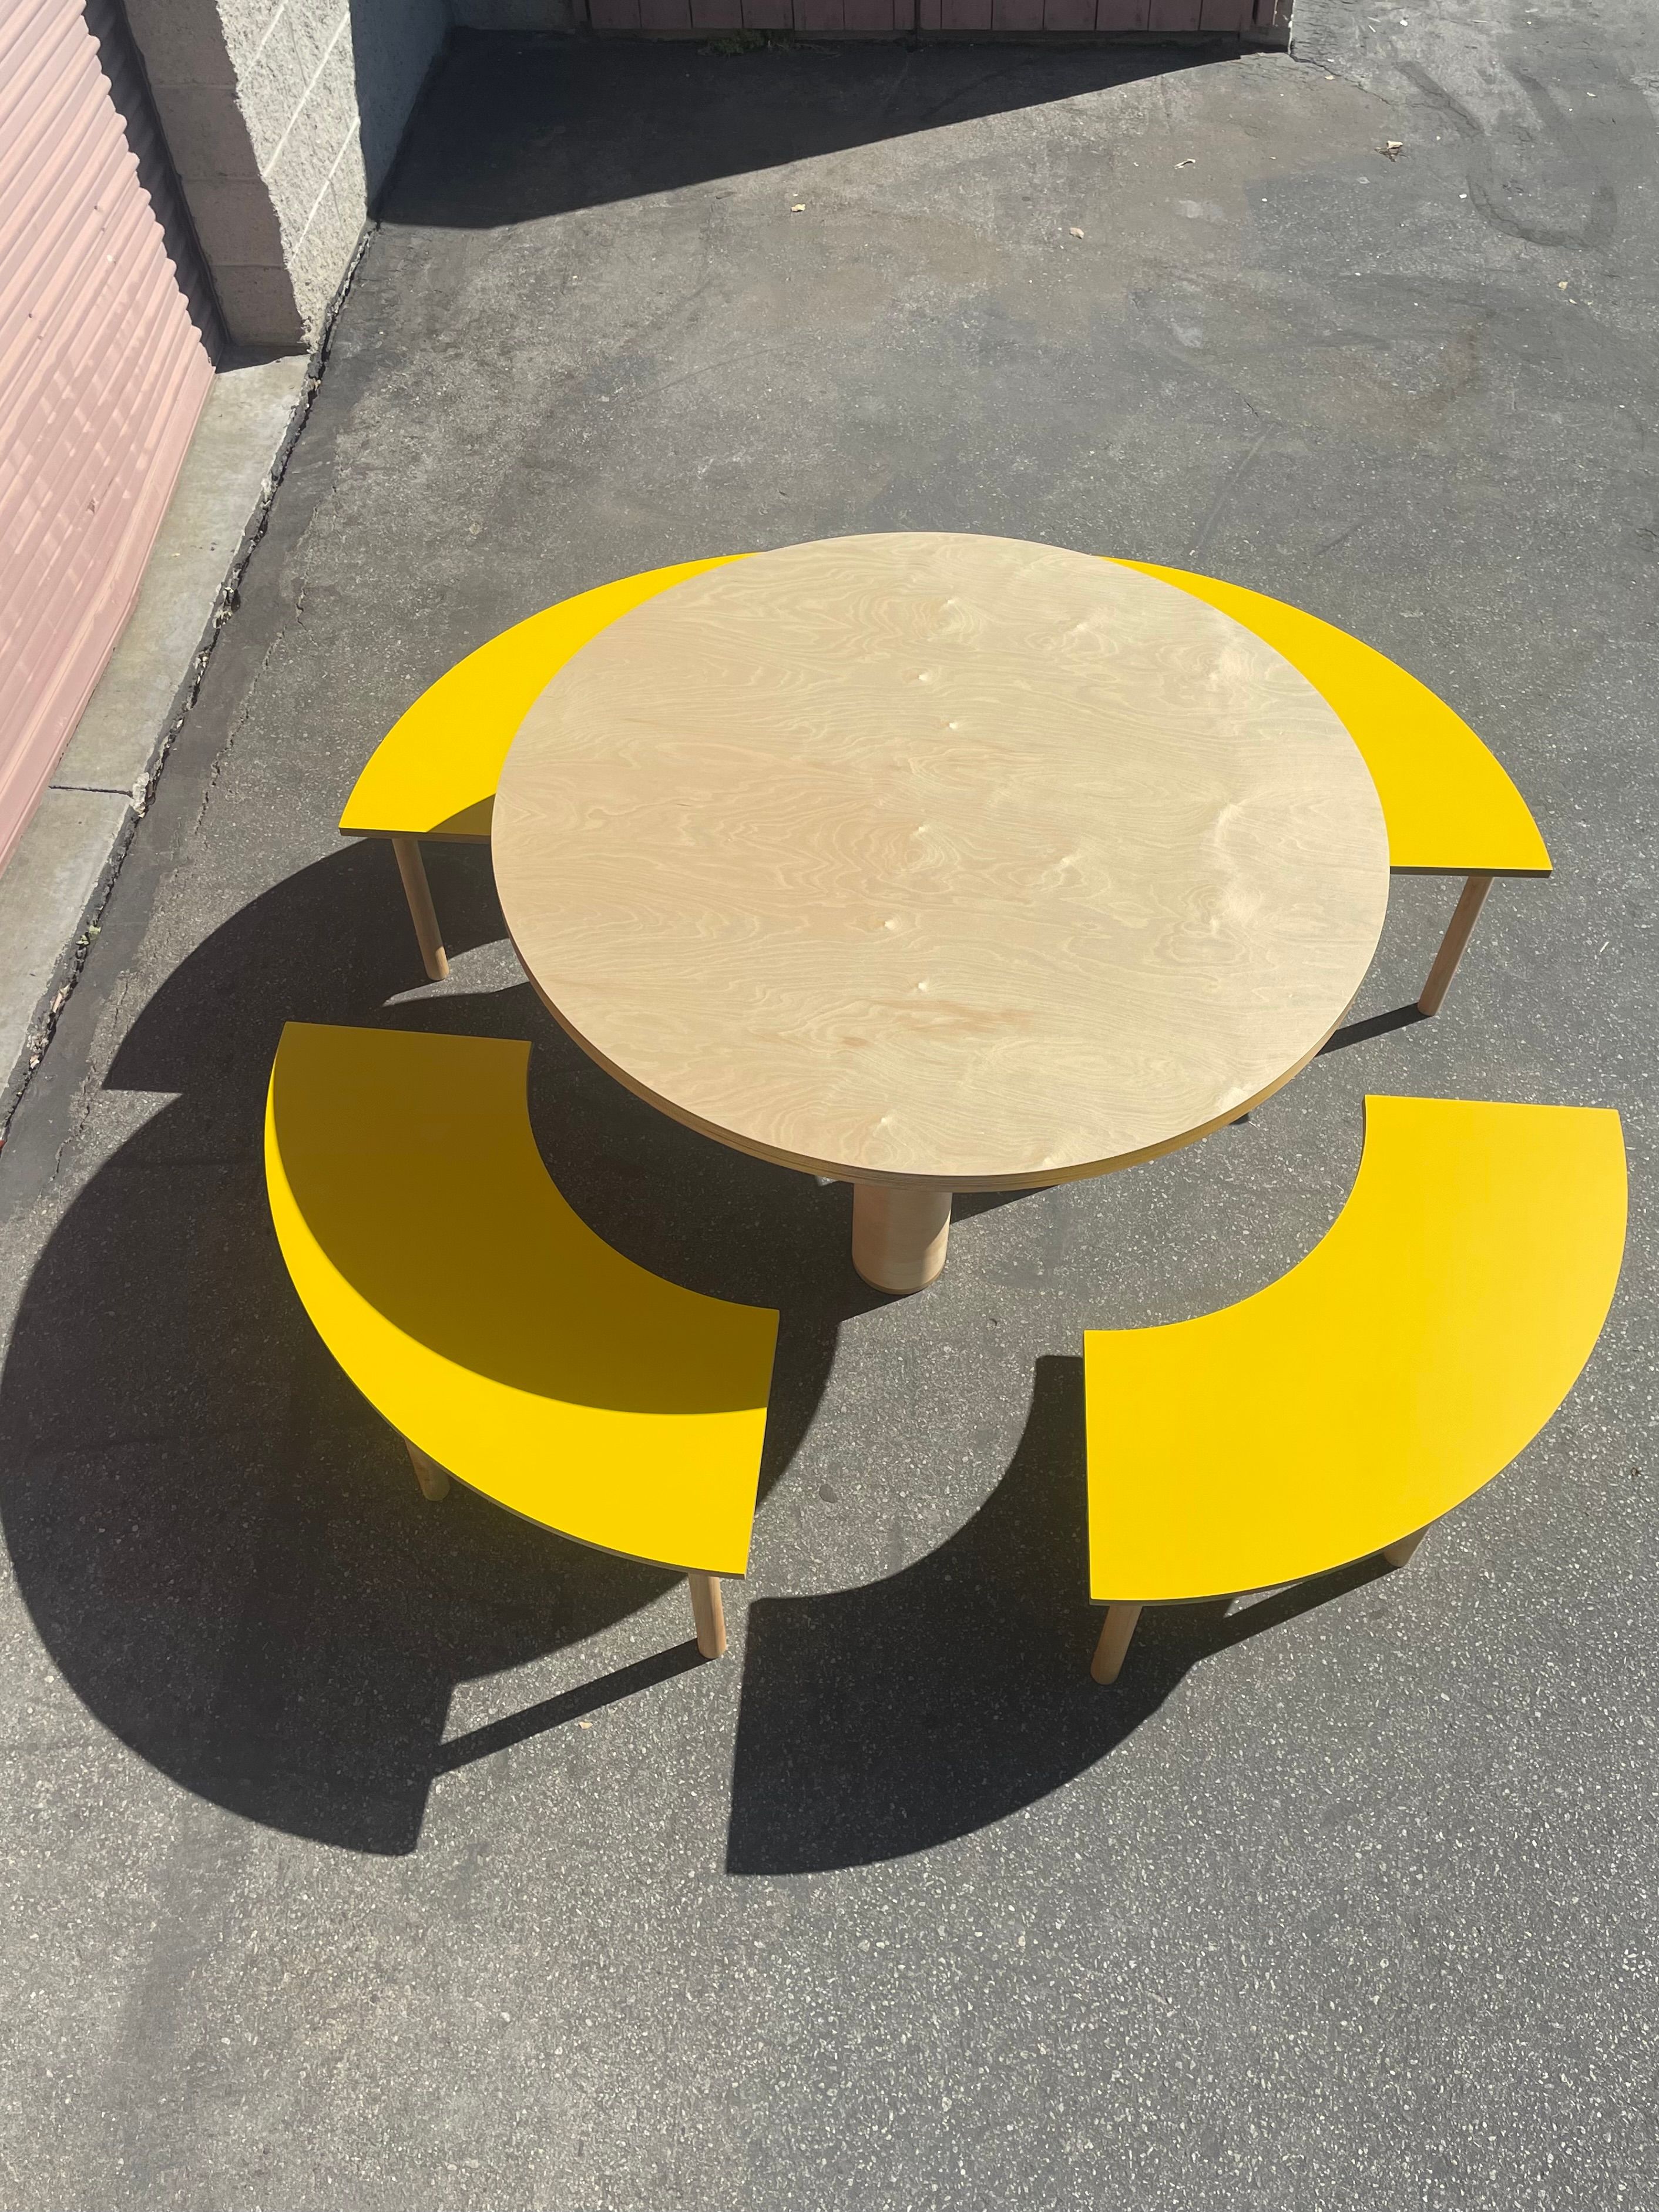  Circle Table + Bench Set II product image 3